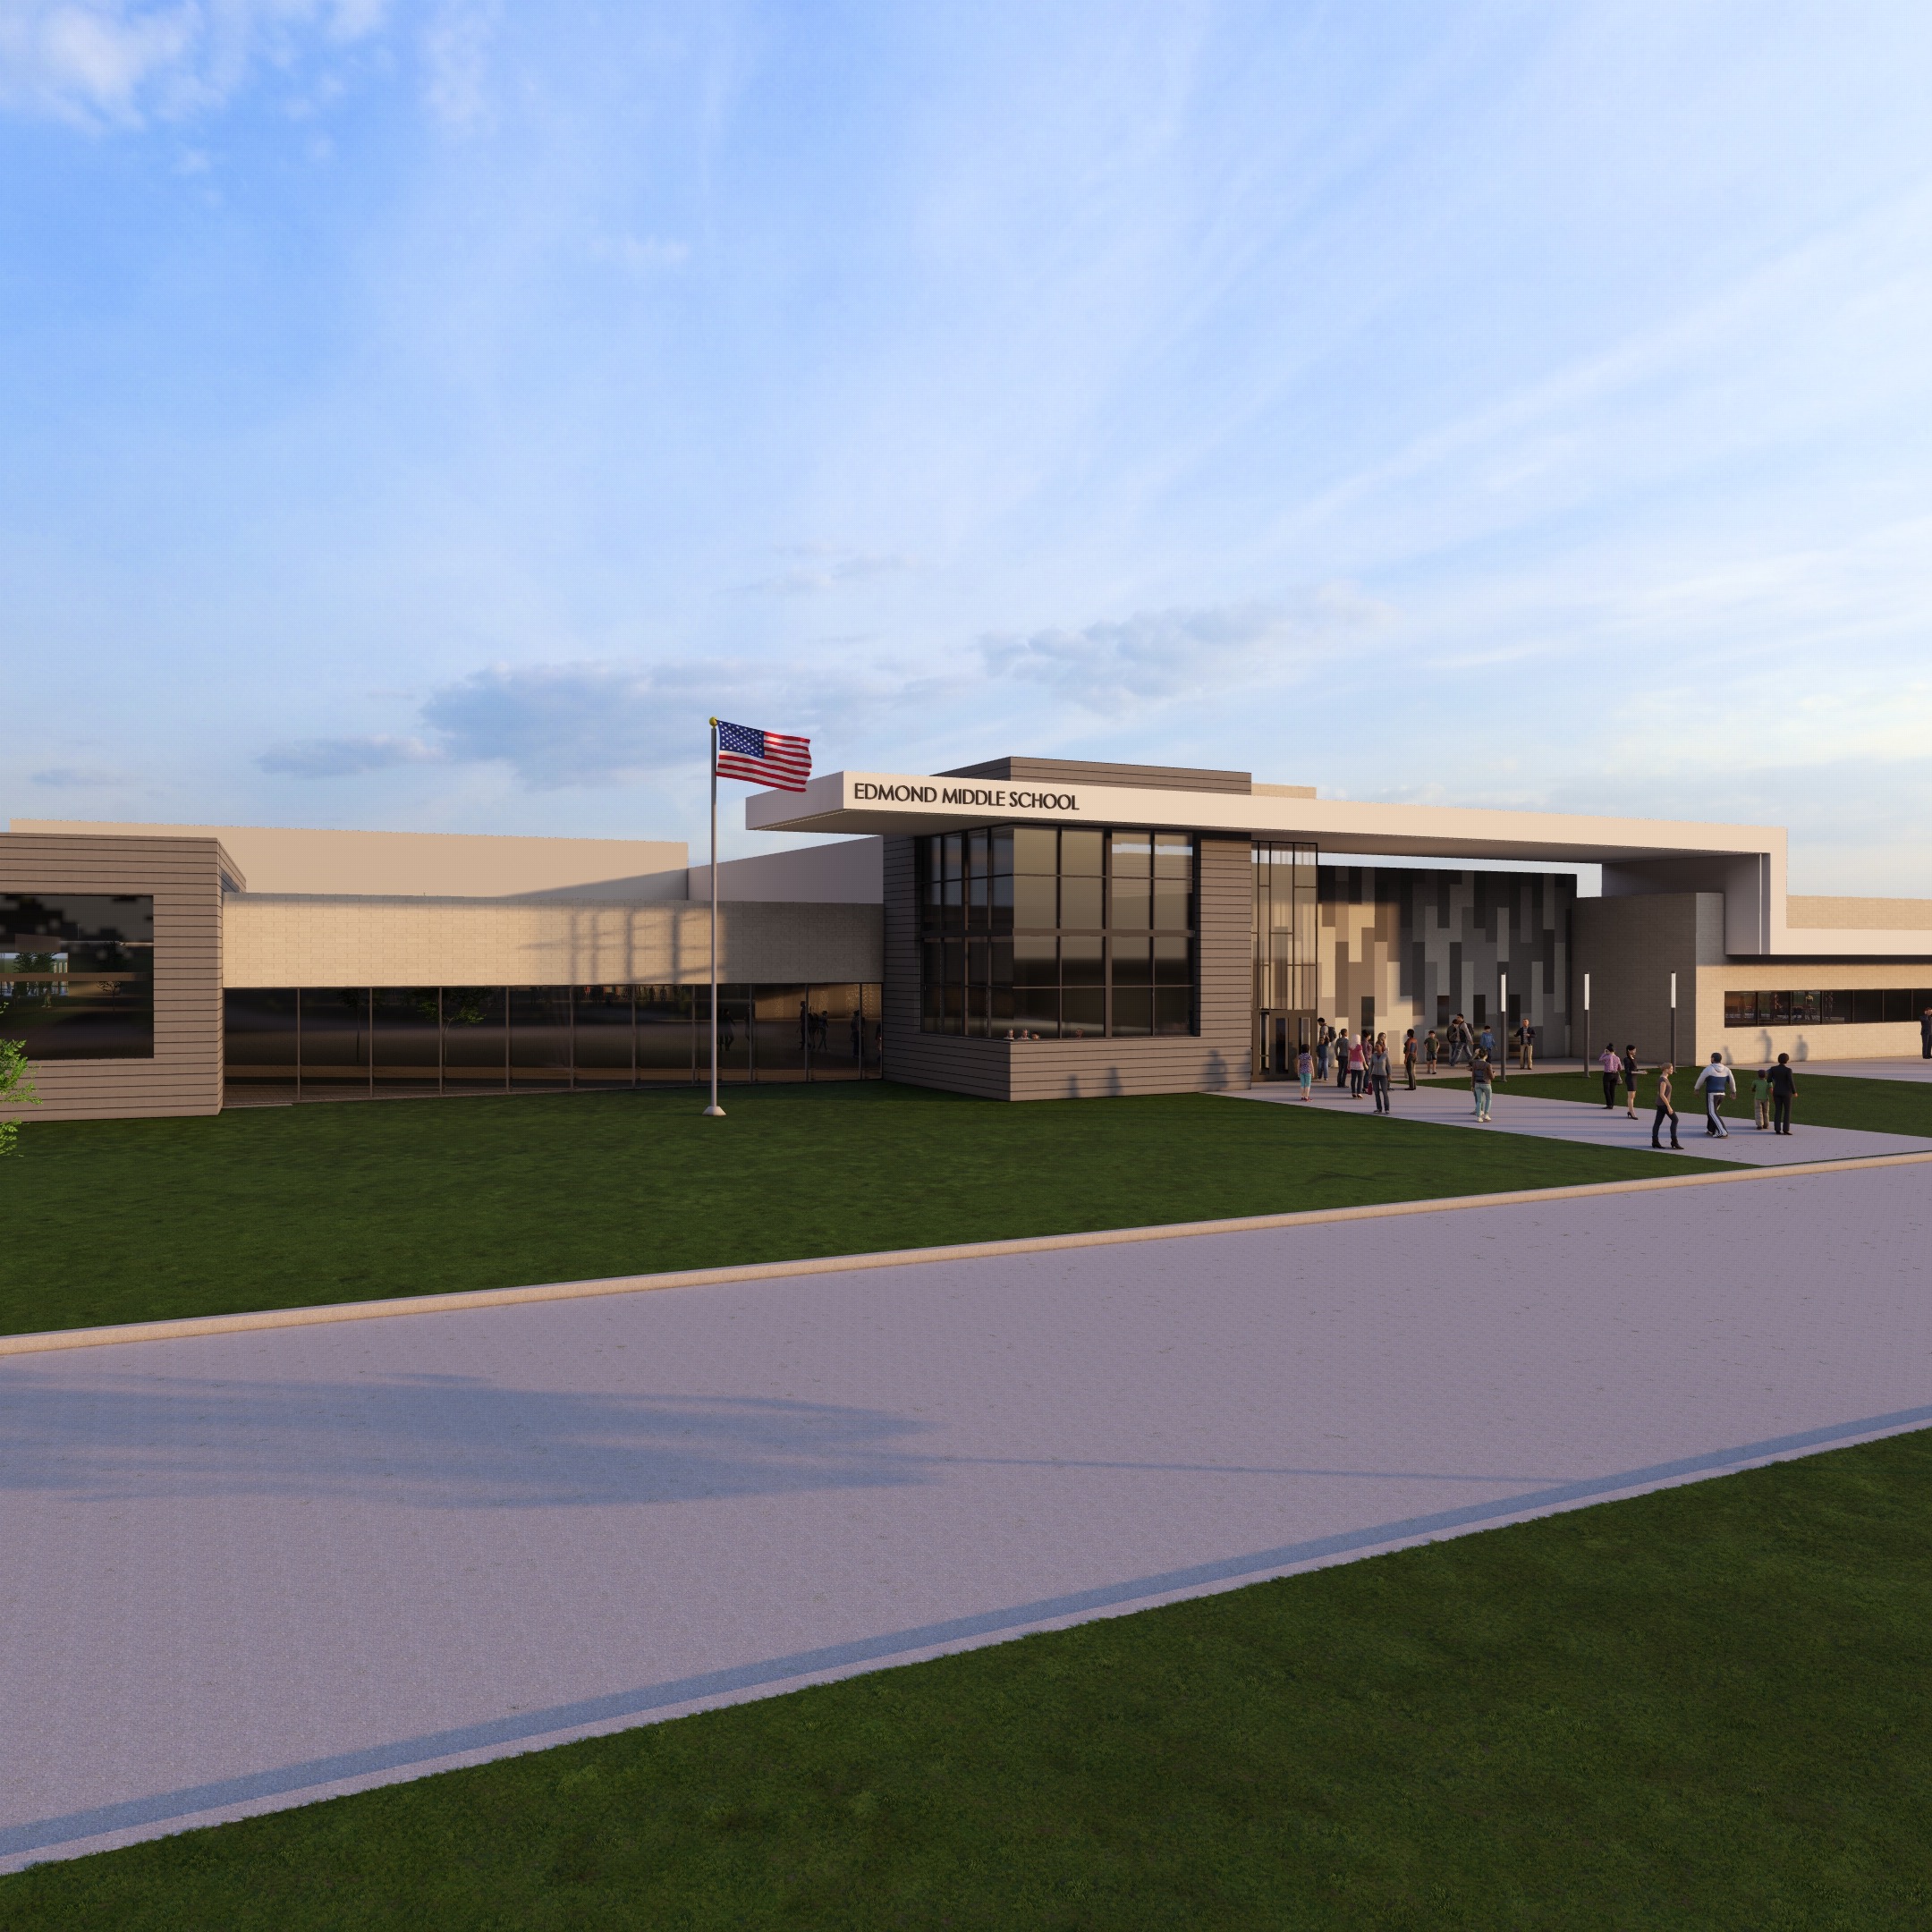 rendering of new Edmond middle school